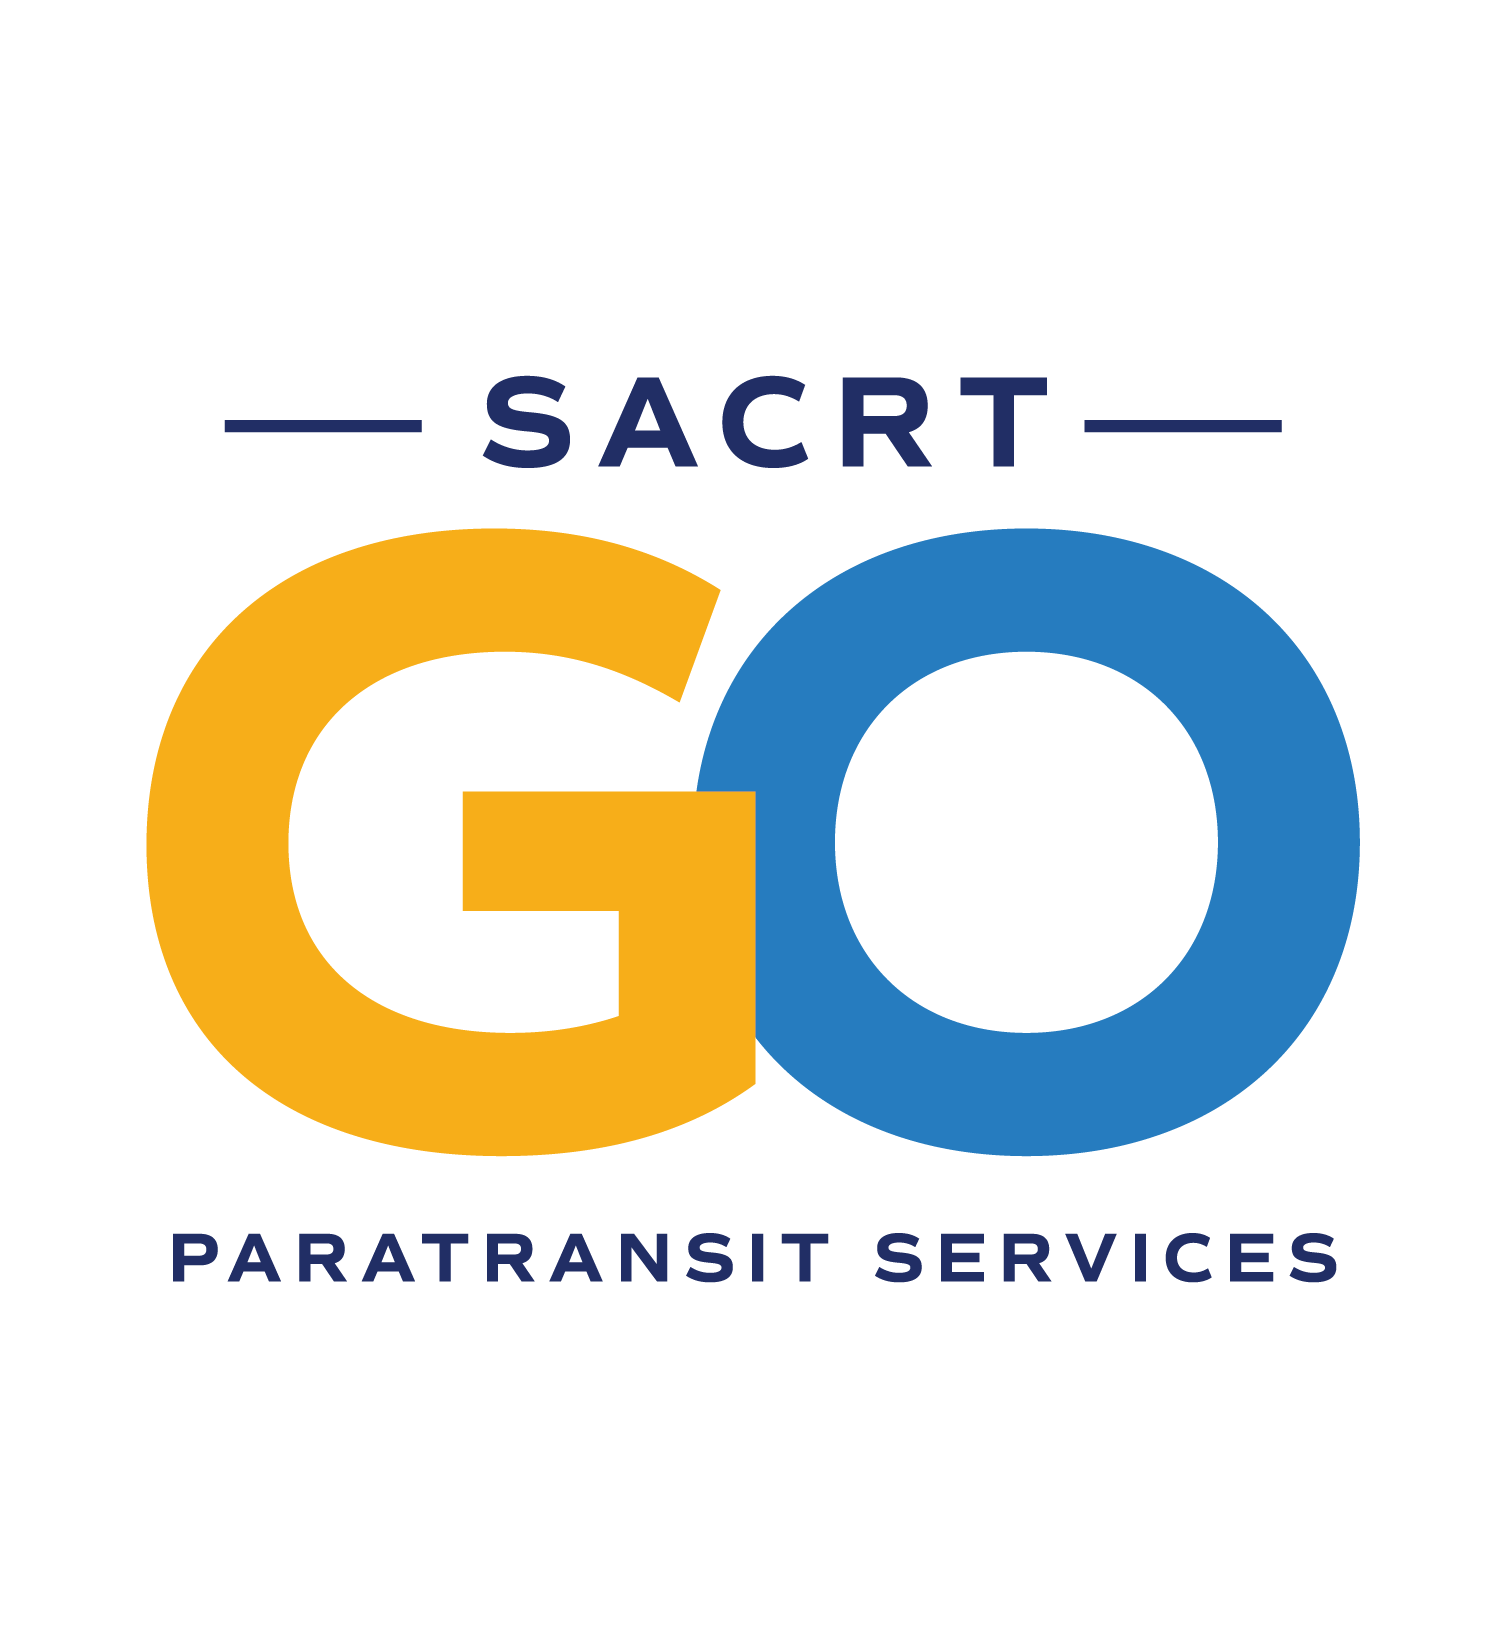 SACRT GO Stacked Logo